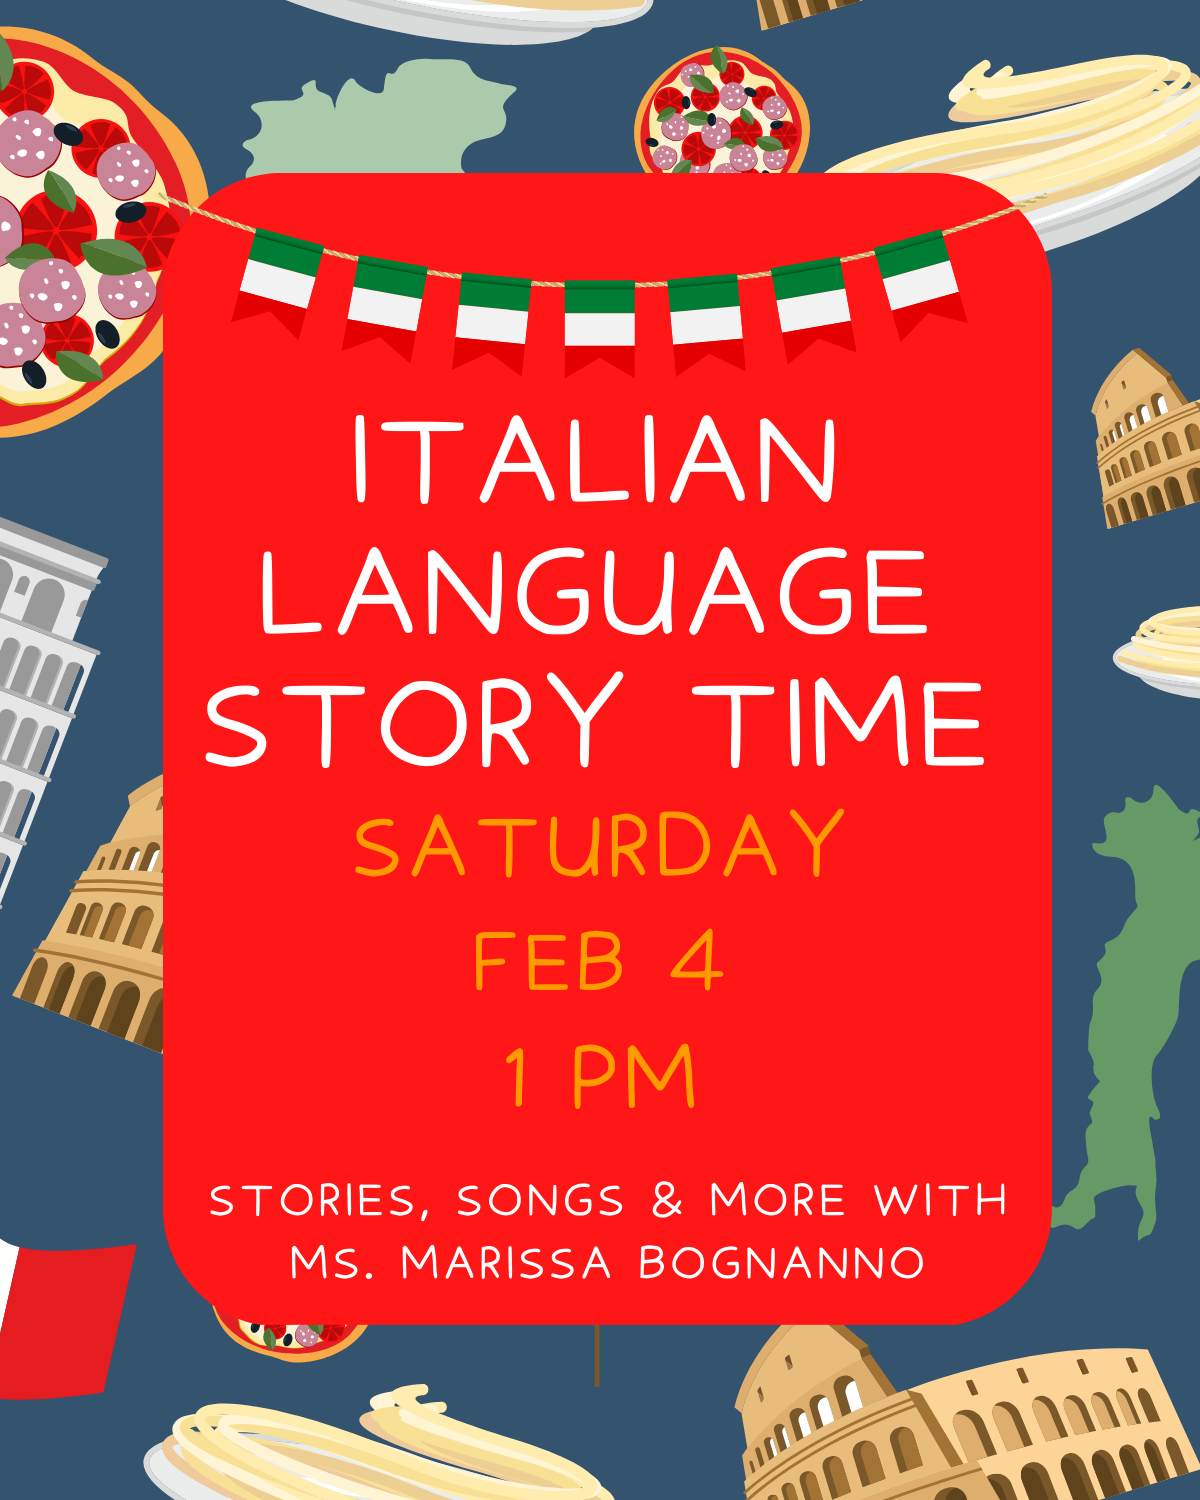 Italian Language story time Saturday Febraury 4 1 PM